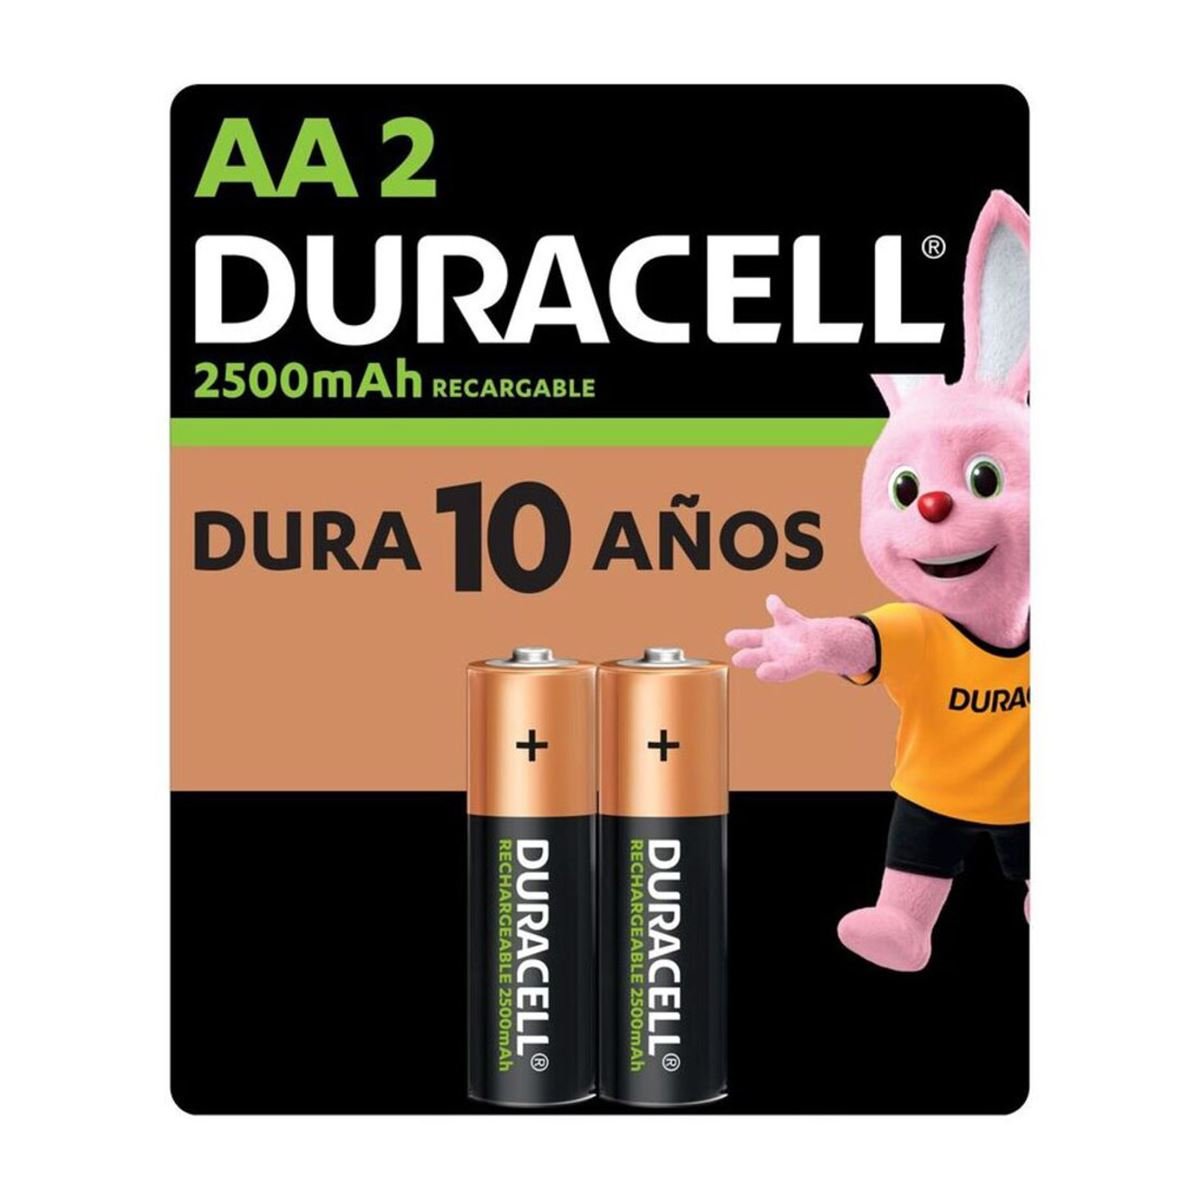 Las mejores ofertas en Duracell pilas recargables AA